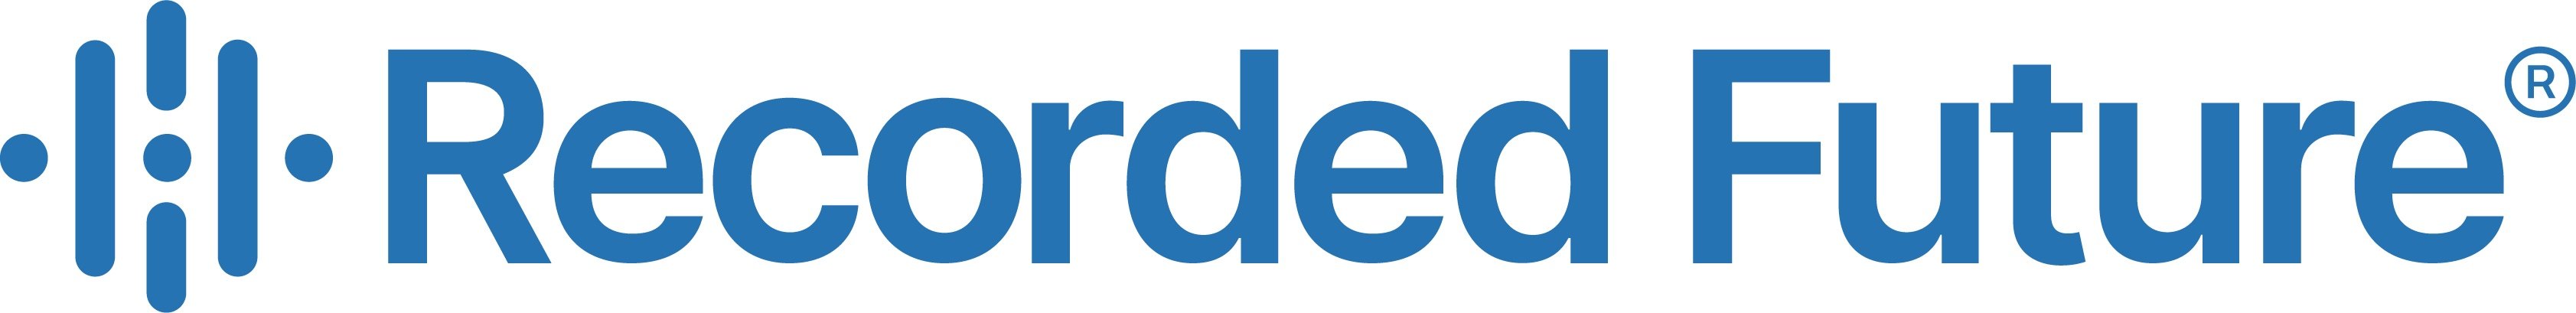 RecordedFuture logo